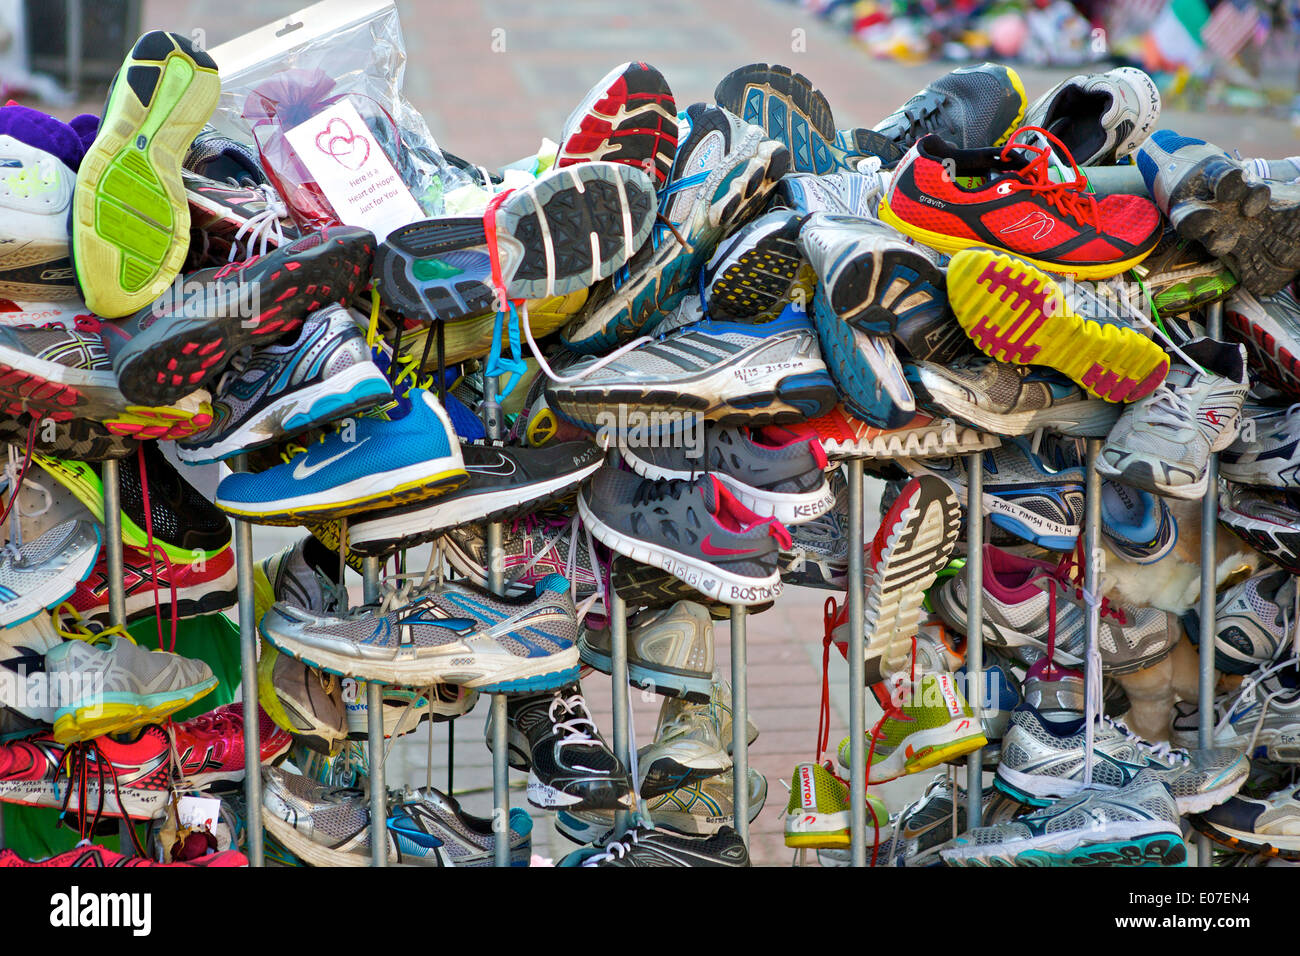 Trainers, Memorial to the victims of the 2013 Boston Marathon Bombings. Copley Square. Boston. Stock Photo